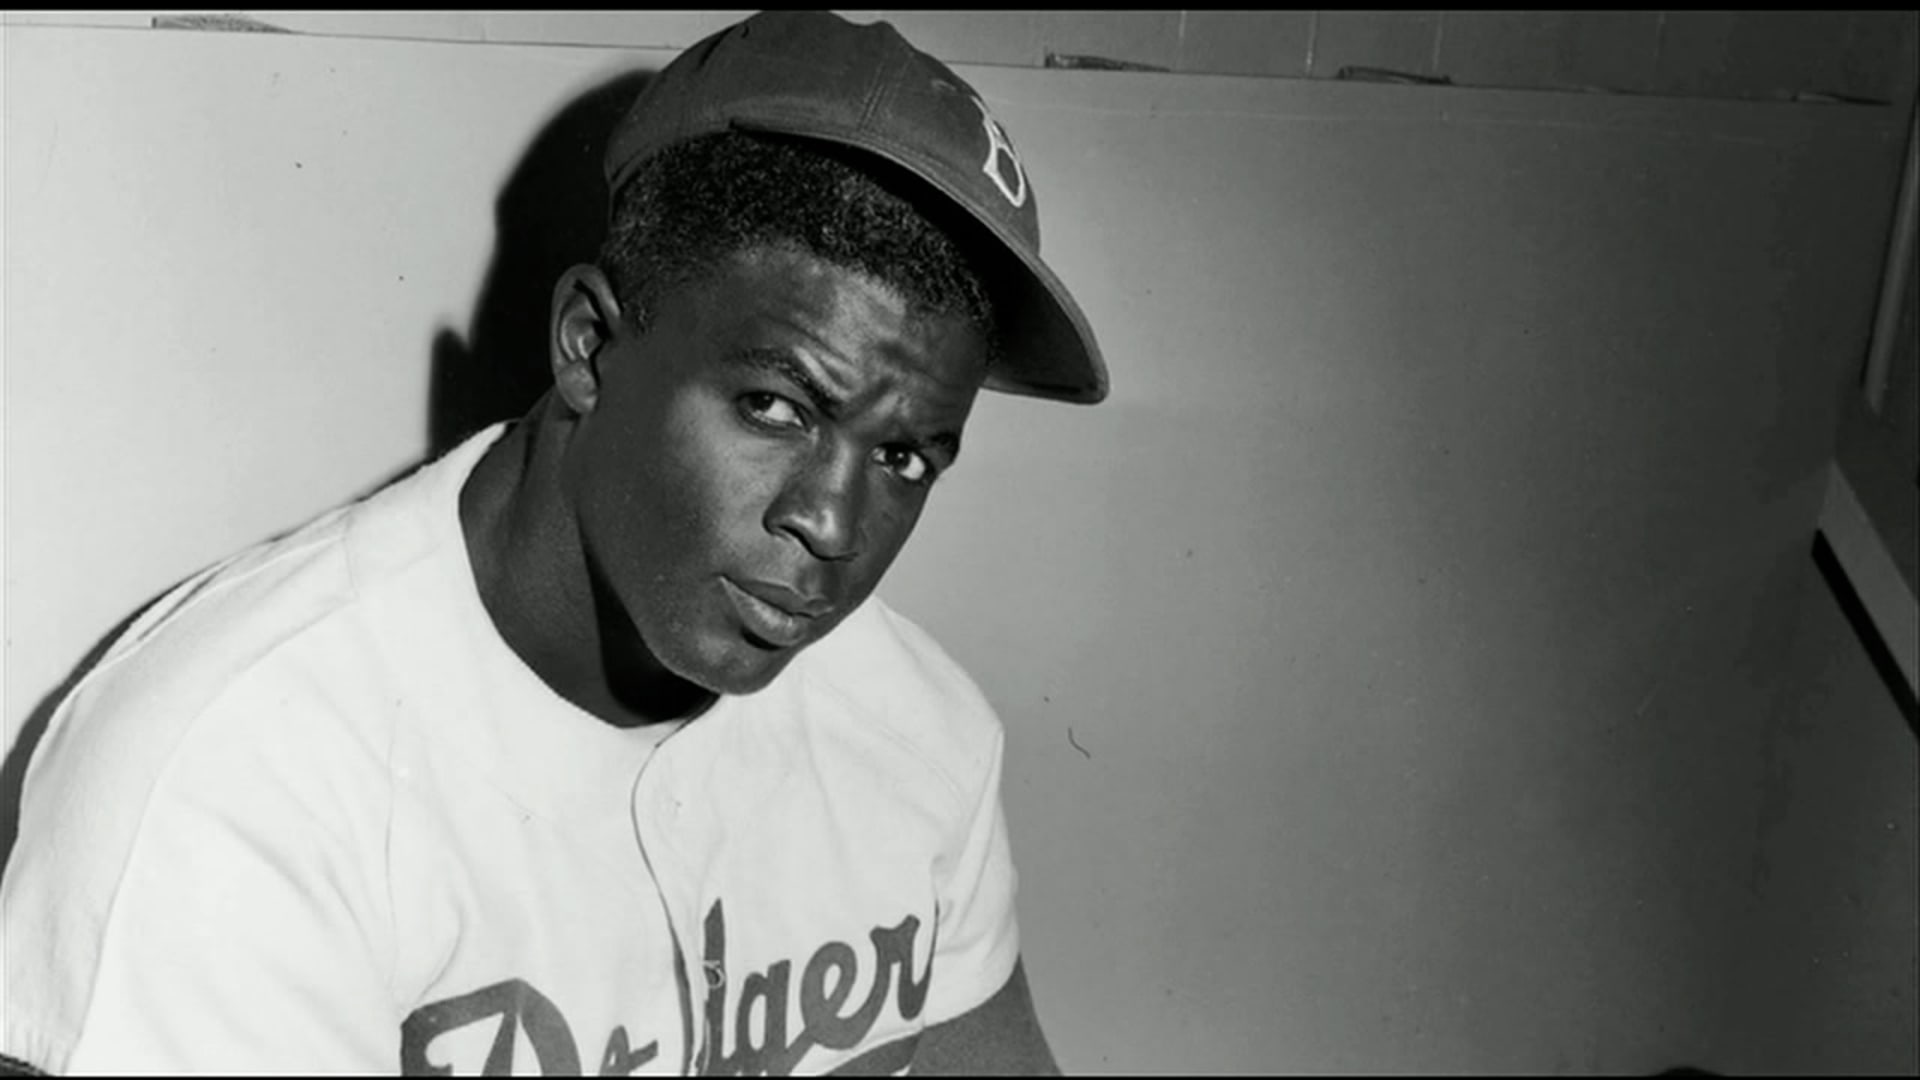 MLB Stories - Jackie Robinson bio career highlights